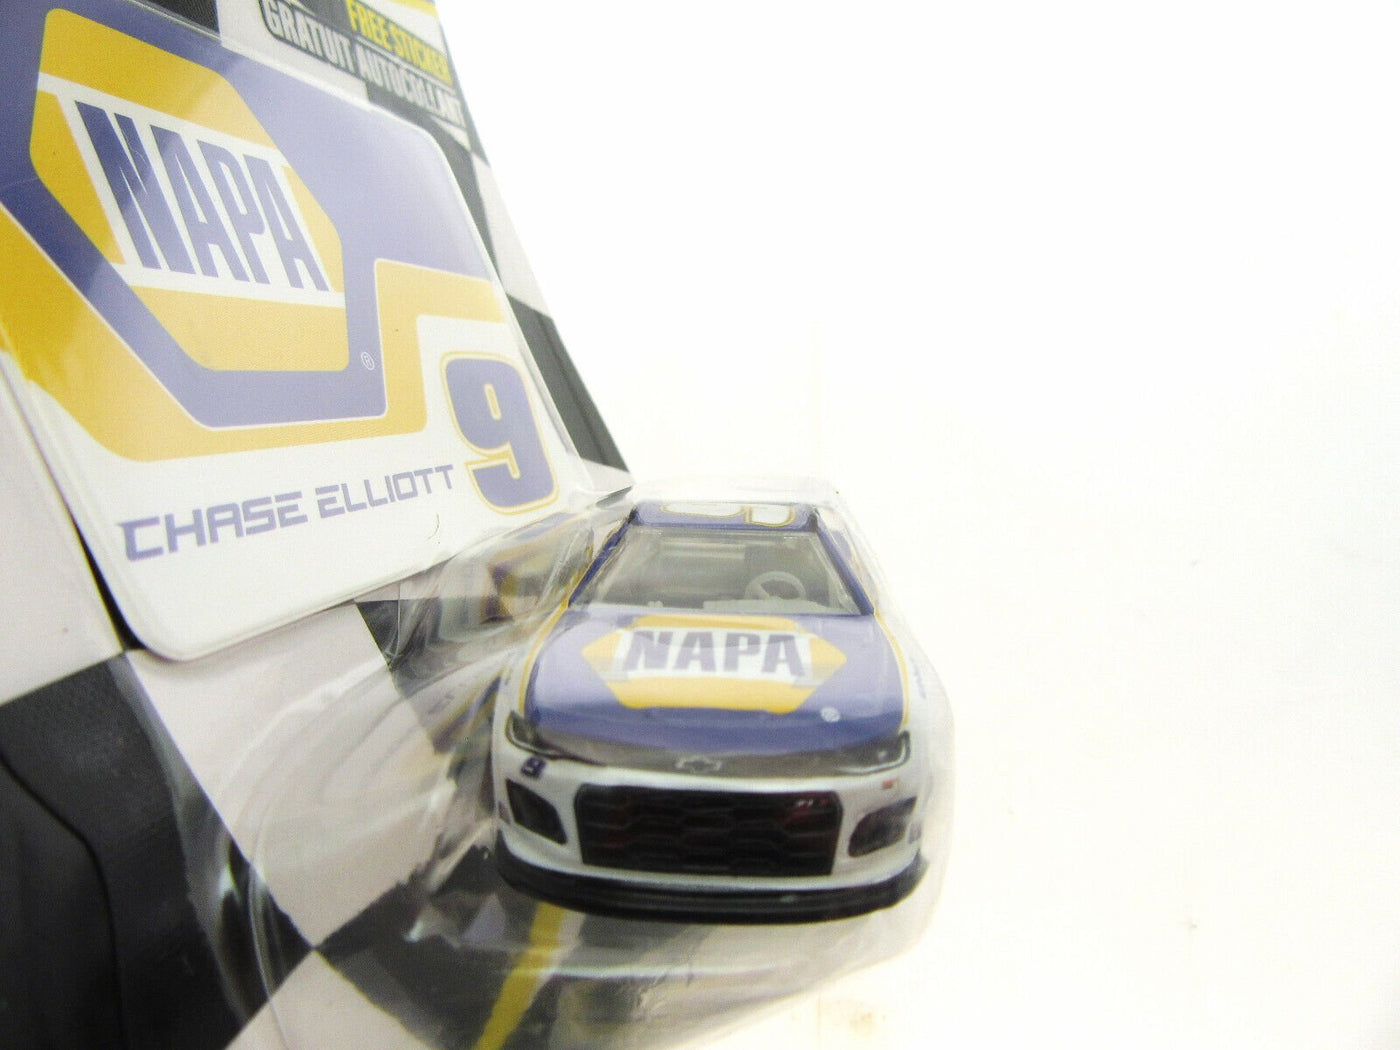 NAPA ~ Chase Elliott 9 ~ Rig & Car ~ NASCAR Authentics ~ Die Cast 1:64 Scale